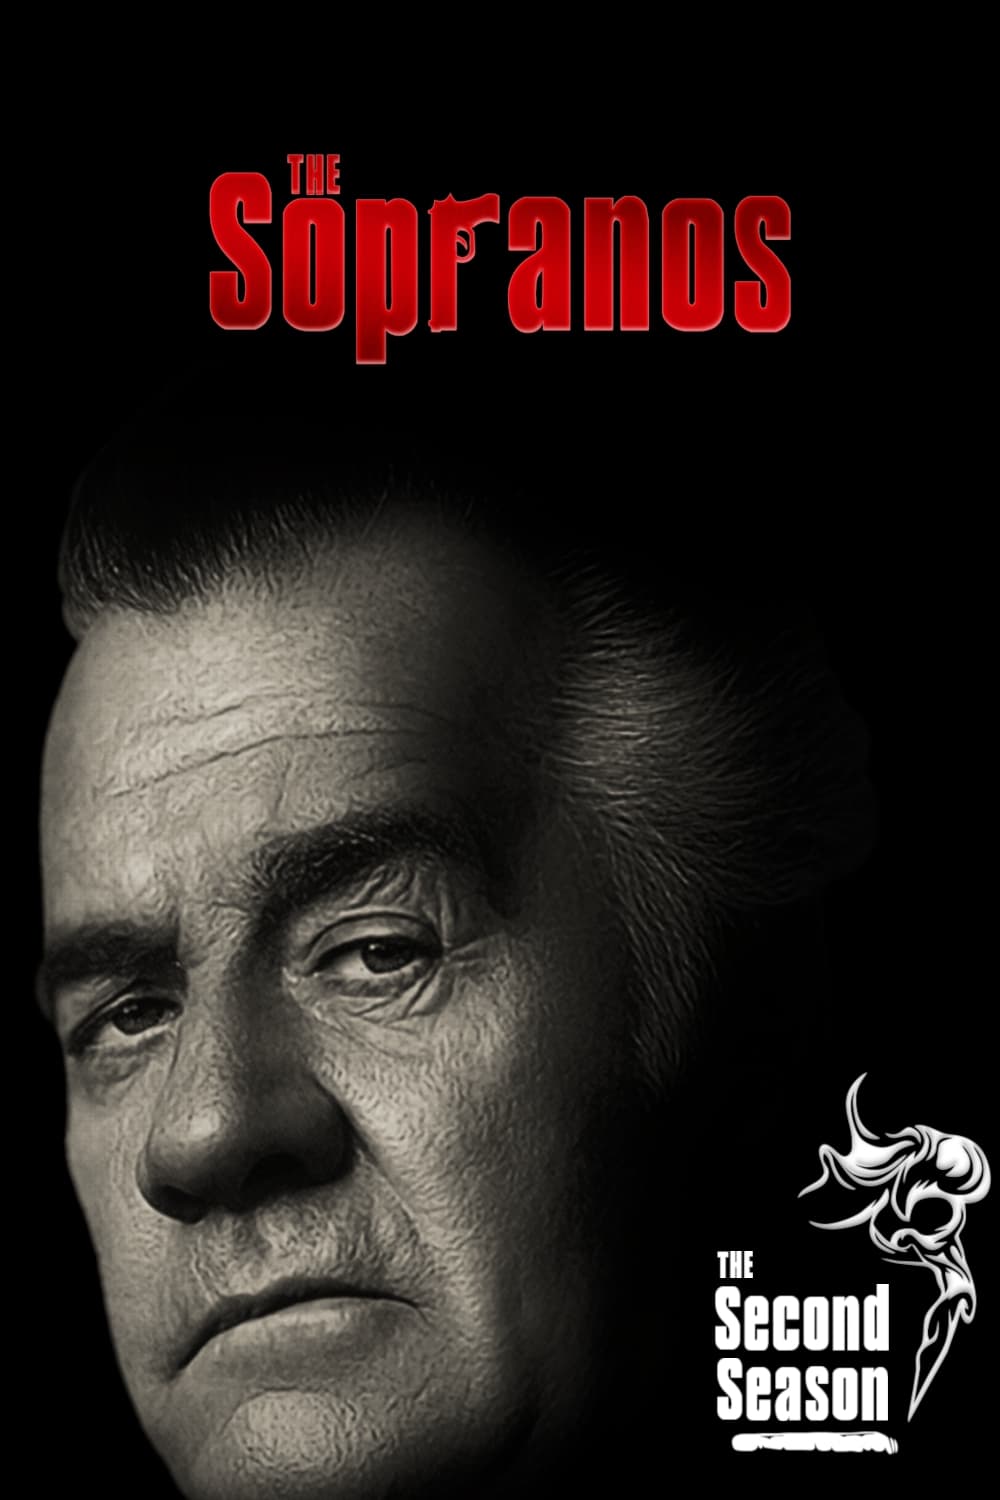 The Sopranos (1999) S02 BDRip 1080p HEVC x265 10-bit mp4a 5.1 NLSubs